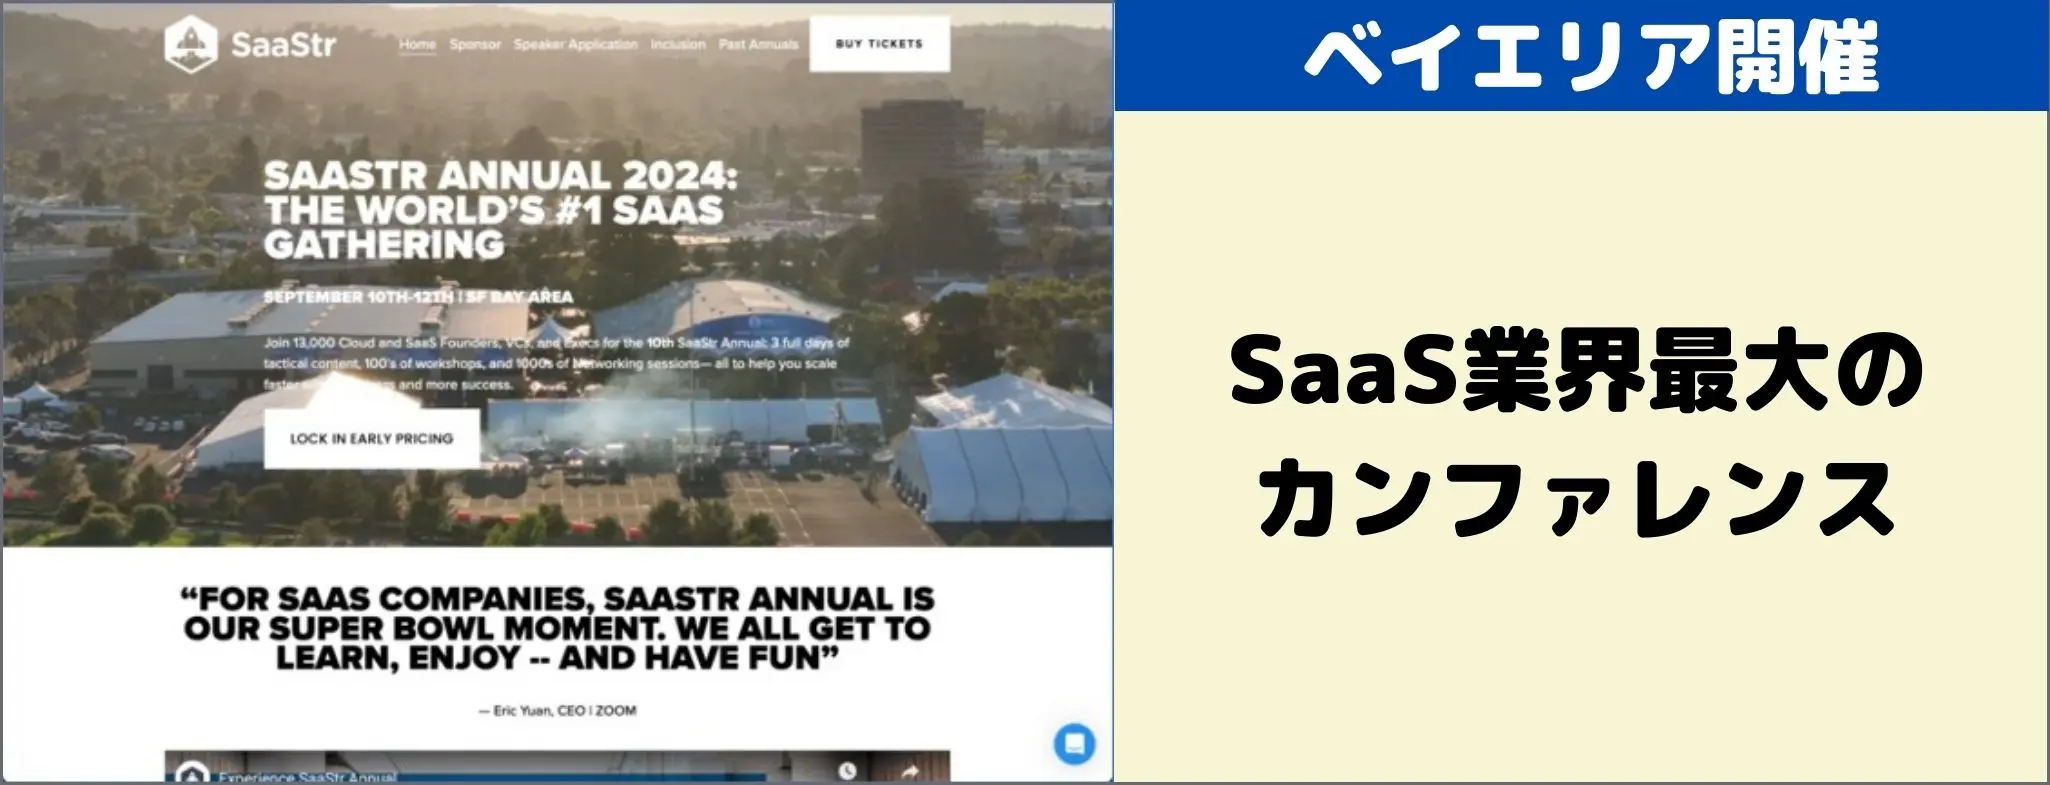 SaaStr Annual 2024 イベントグローブ